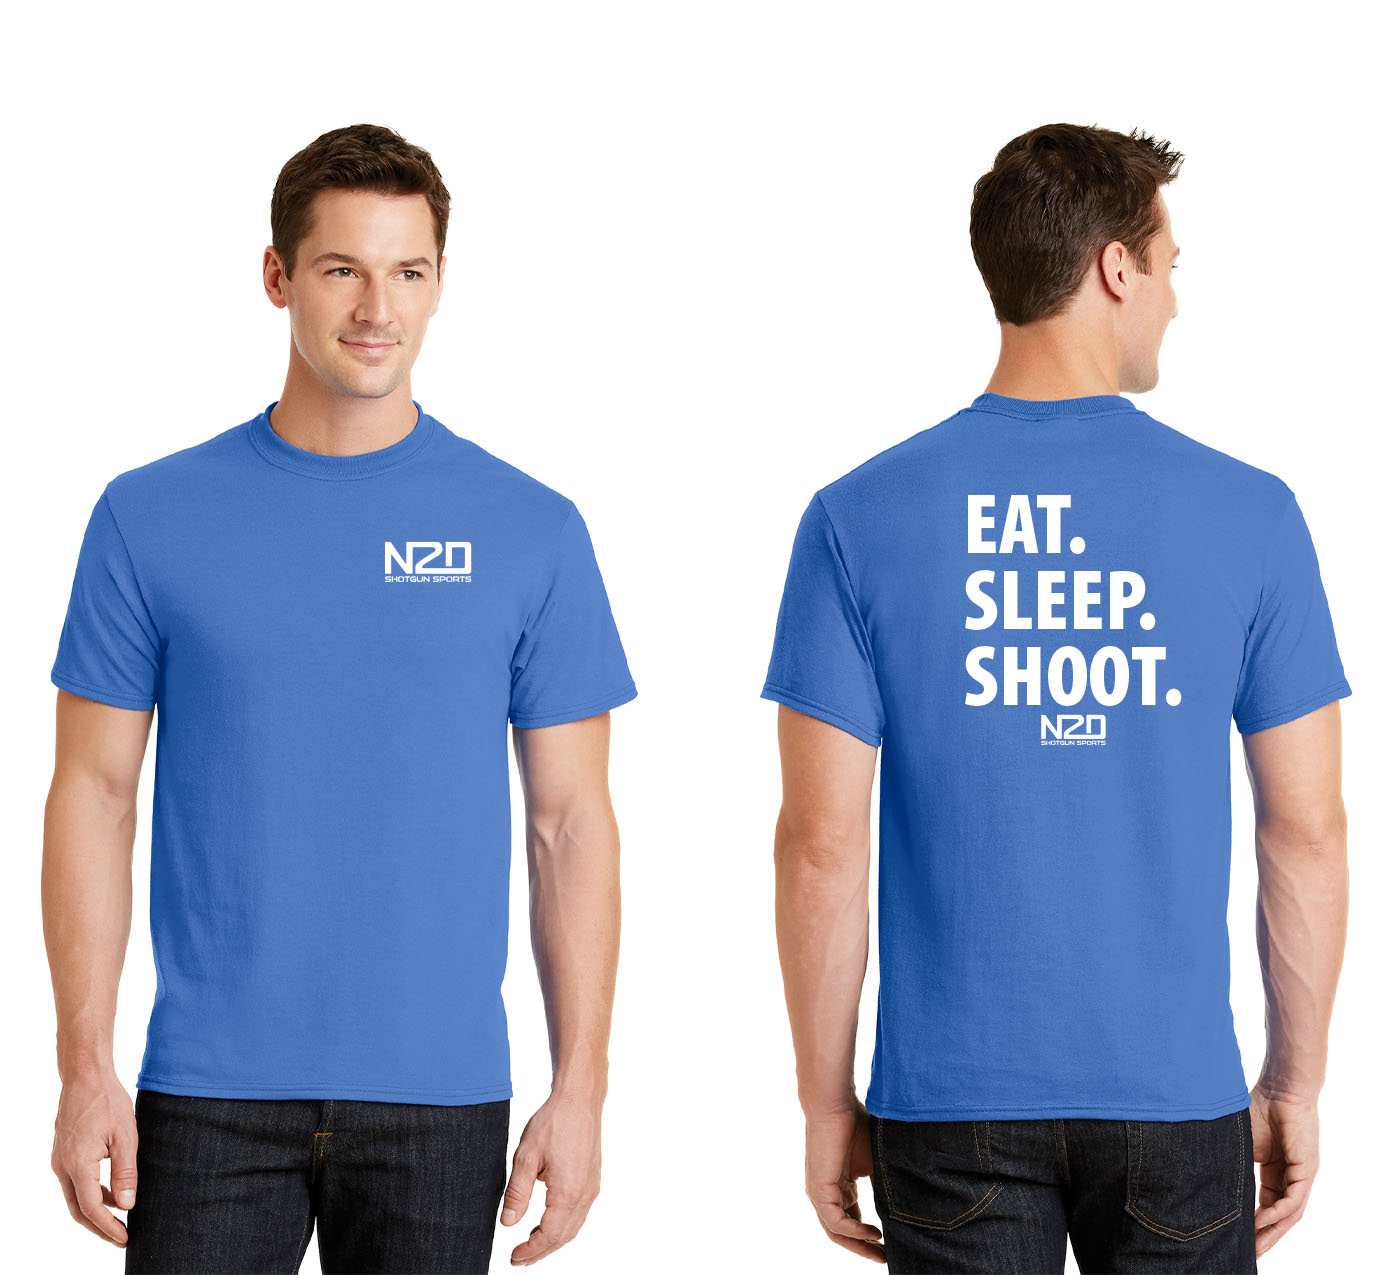 Eat. Sleep. Shoot T-shirt | Smith & Sons Printers Inc